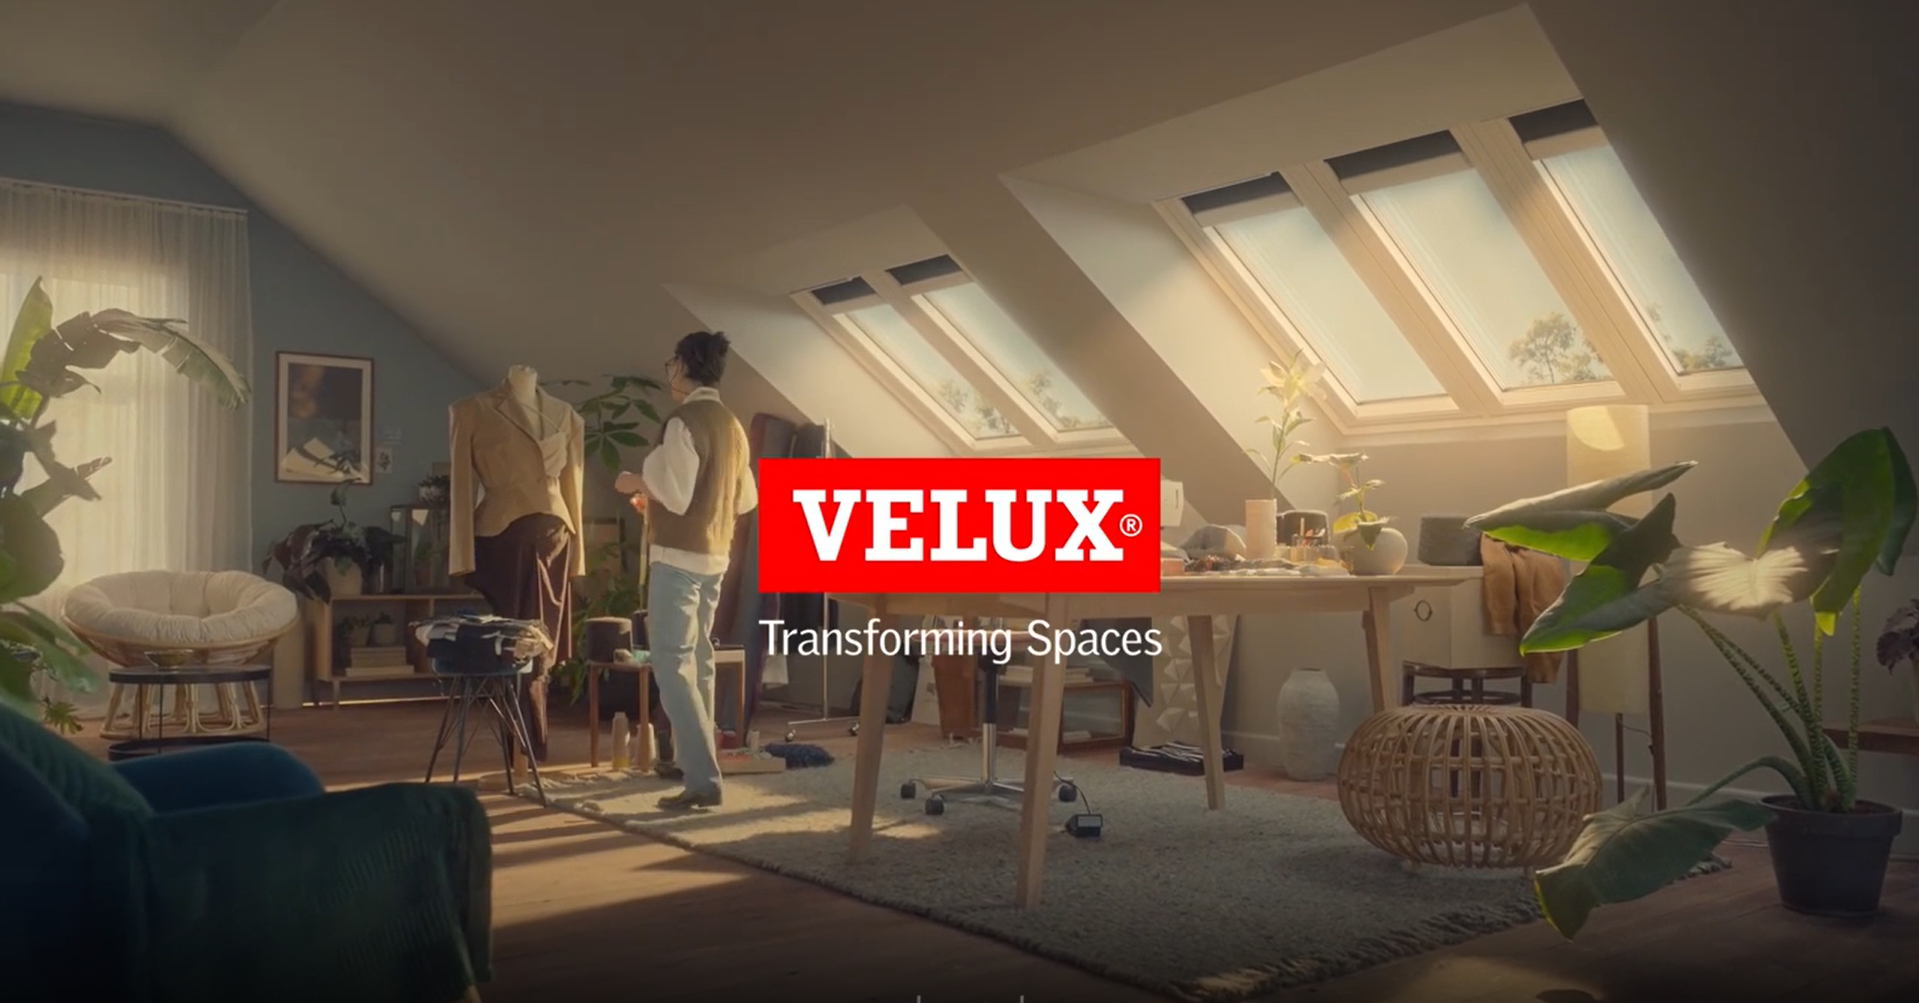 VELUX – Transforming Spaces